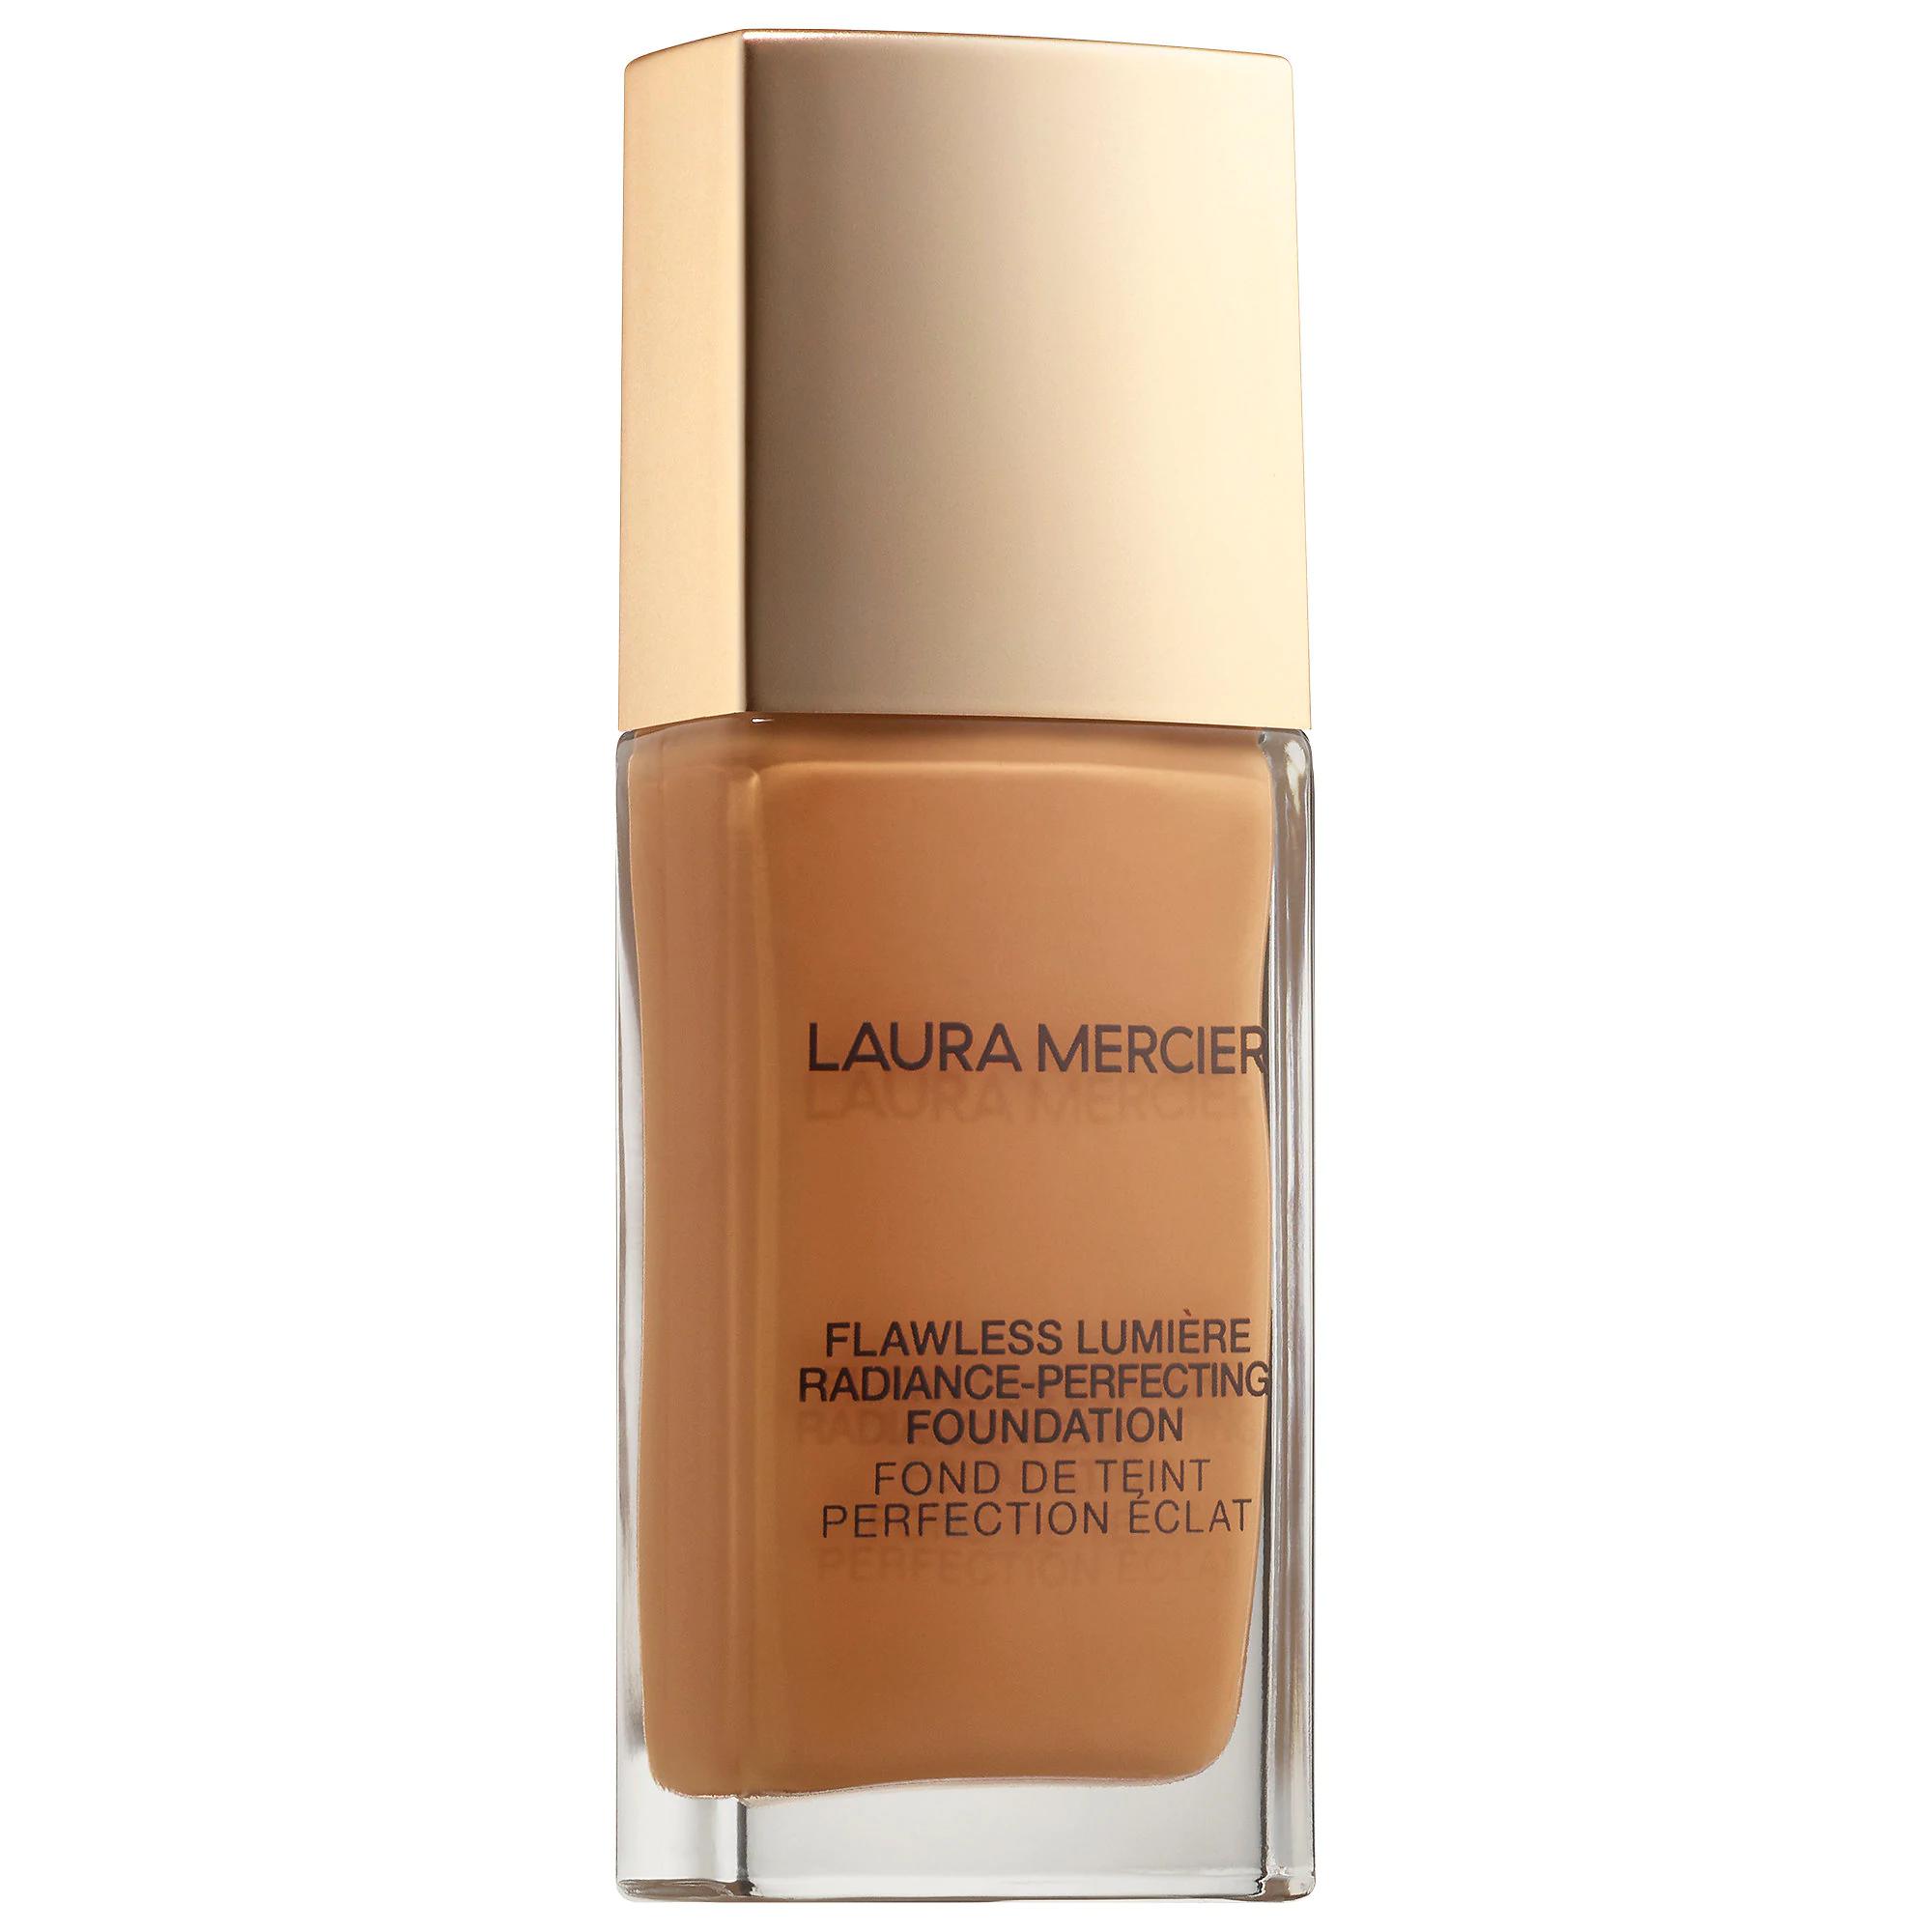 Laura Mercier Flawless Lumiere Radiance-Perfecting Foundation 3W1 Dusk